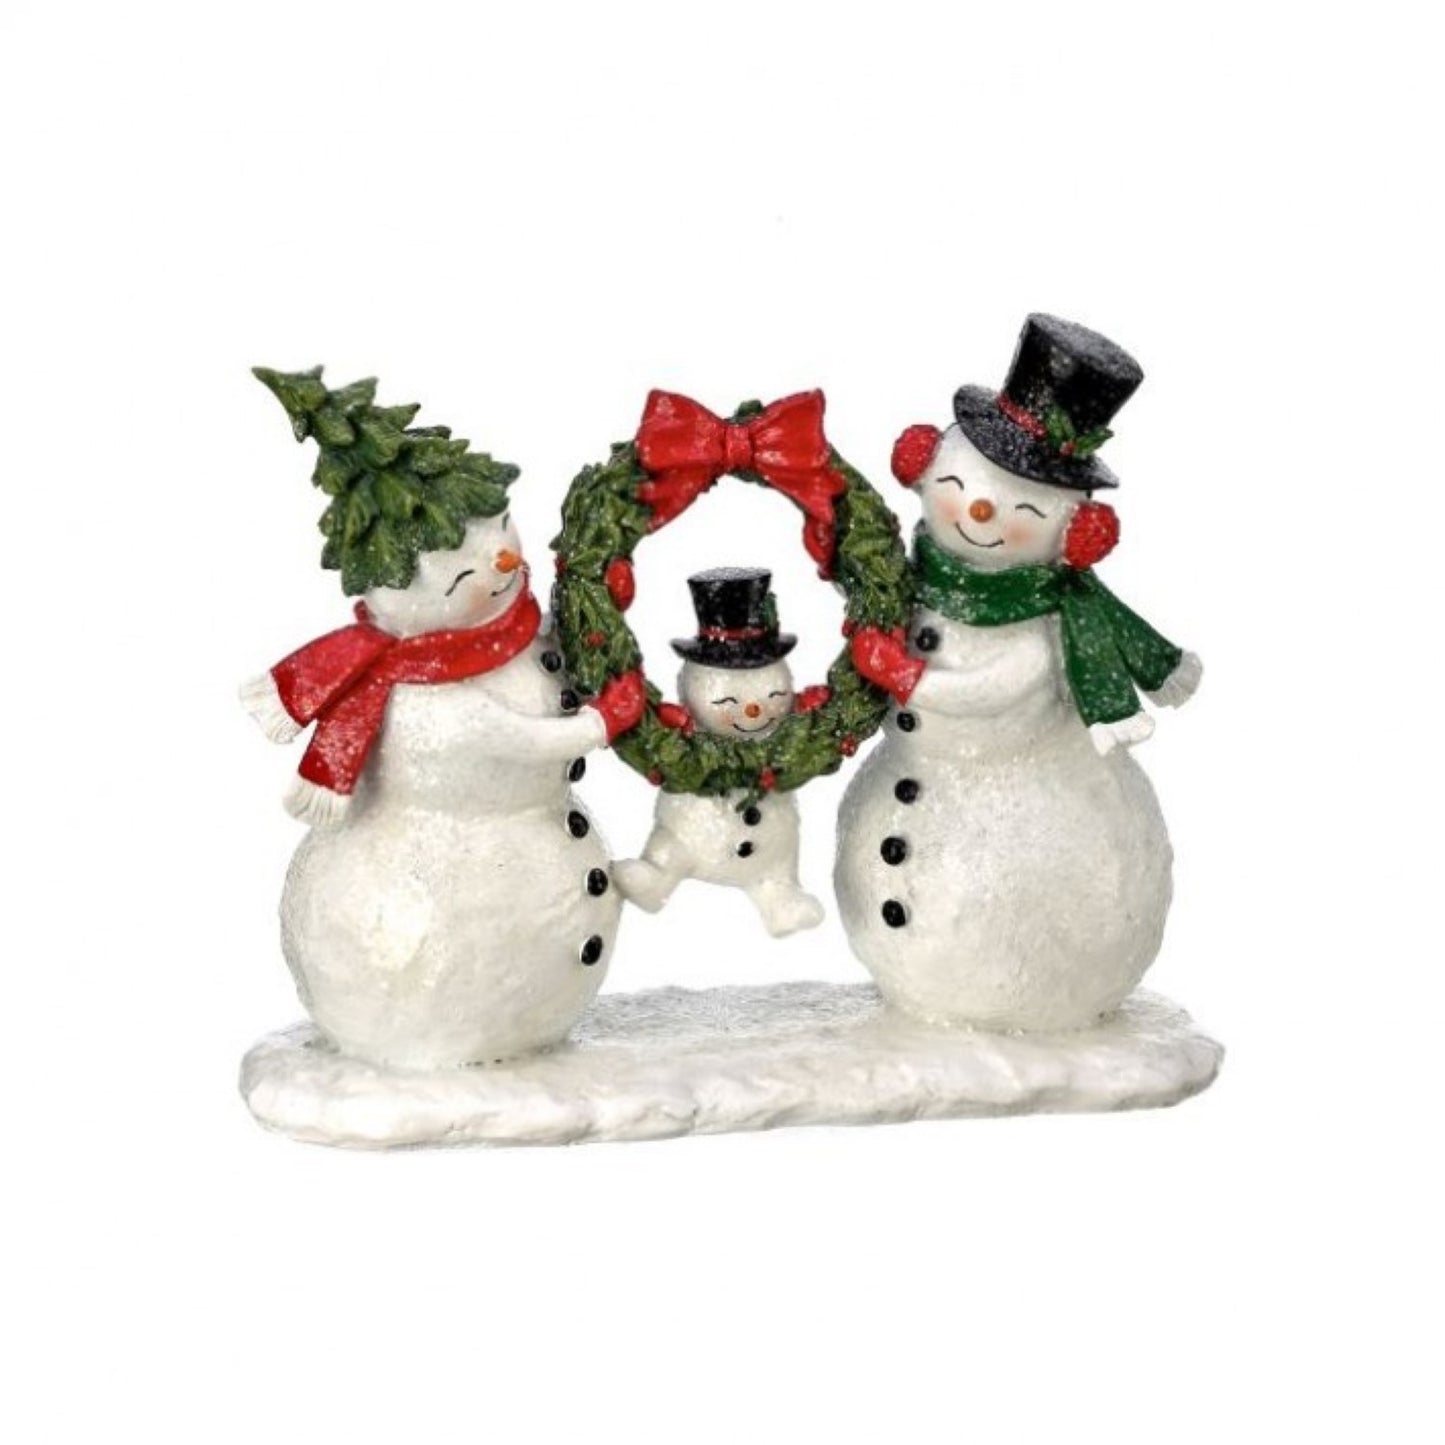 Regency International 10"Resin Snowman Family with Kid in Wreath